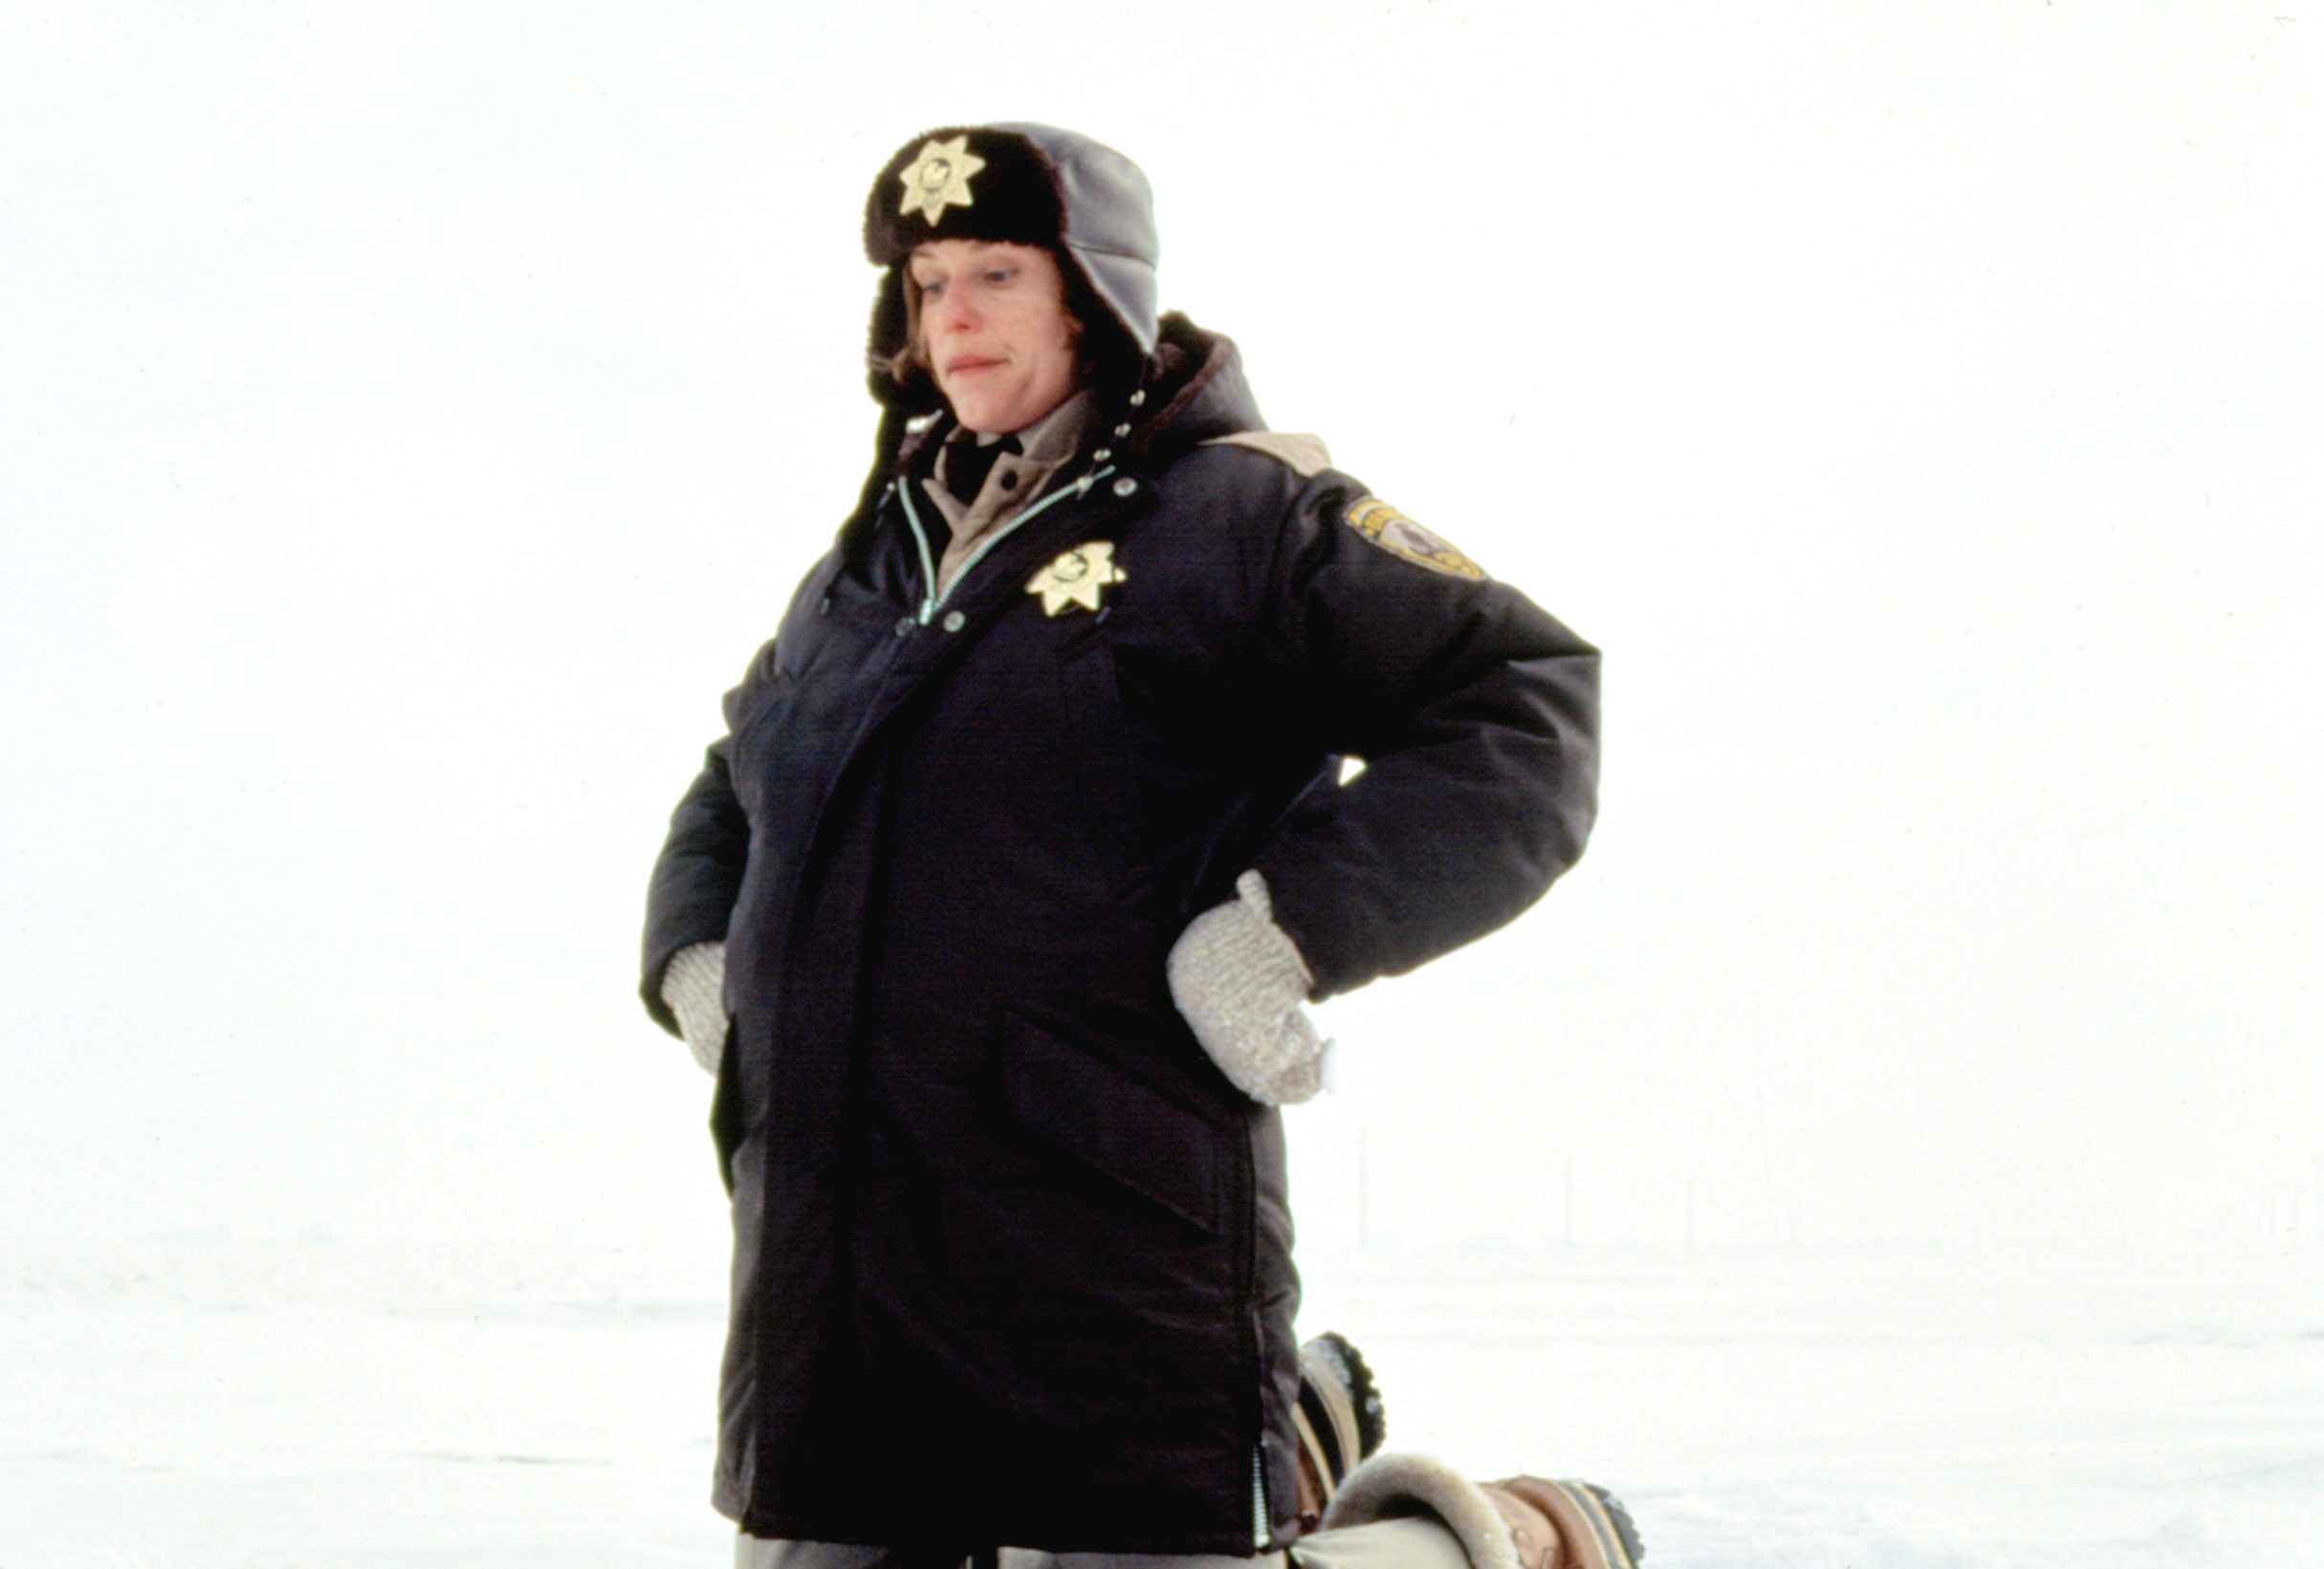 Frances McDormand in her police uniform